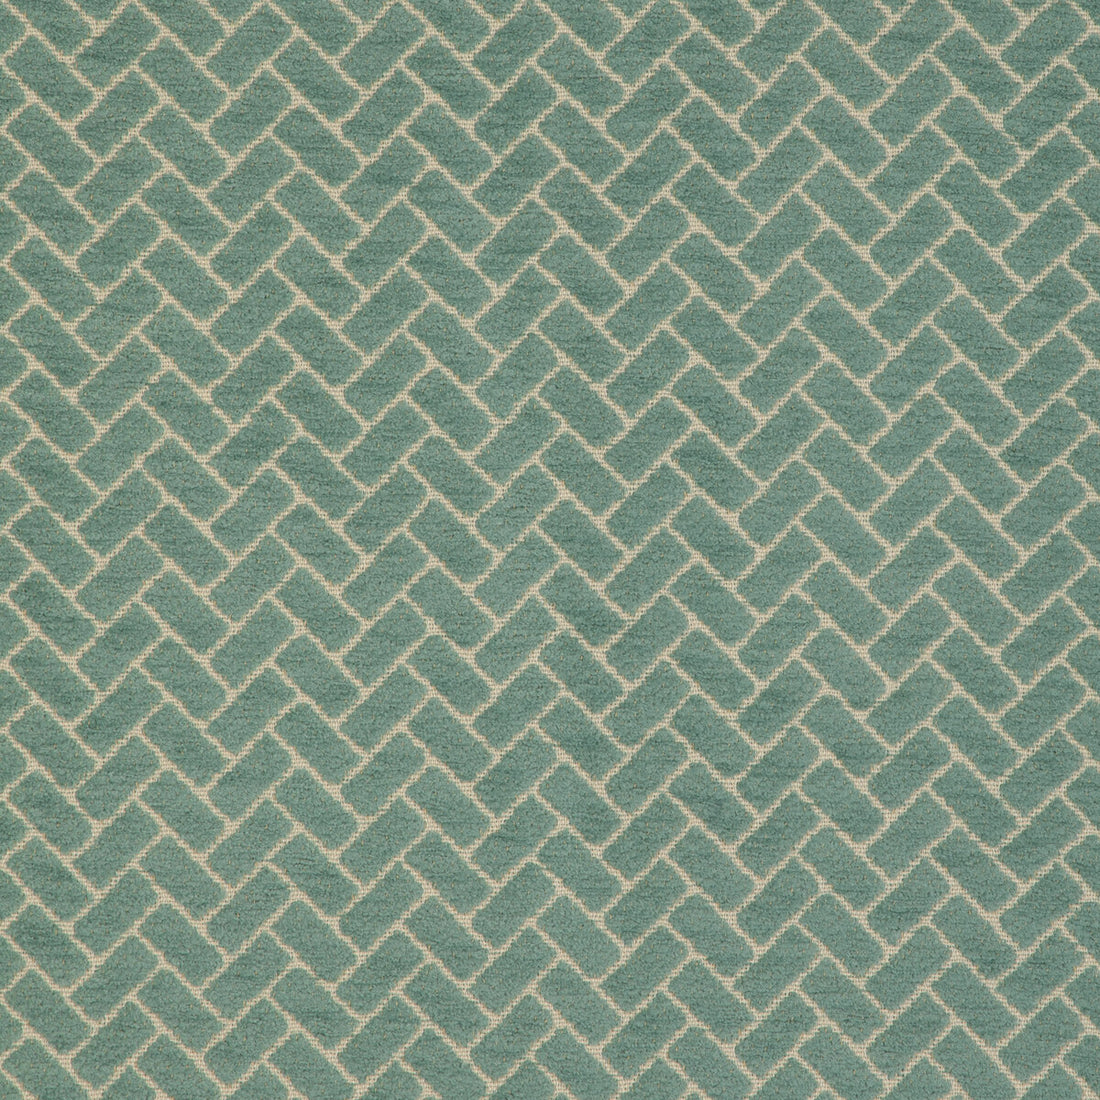 Kravet Smart fabric in 37003-15 color - pattern 37003.15.0 - by Kravet Smart in the Pavilion collection